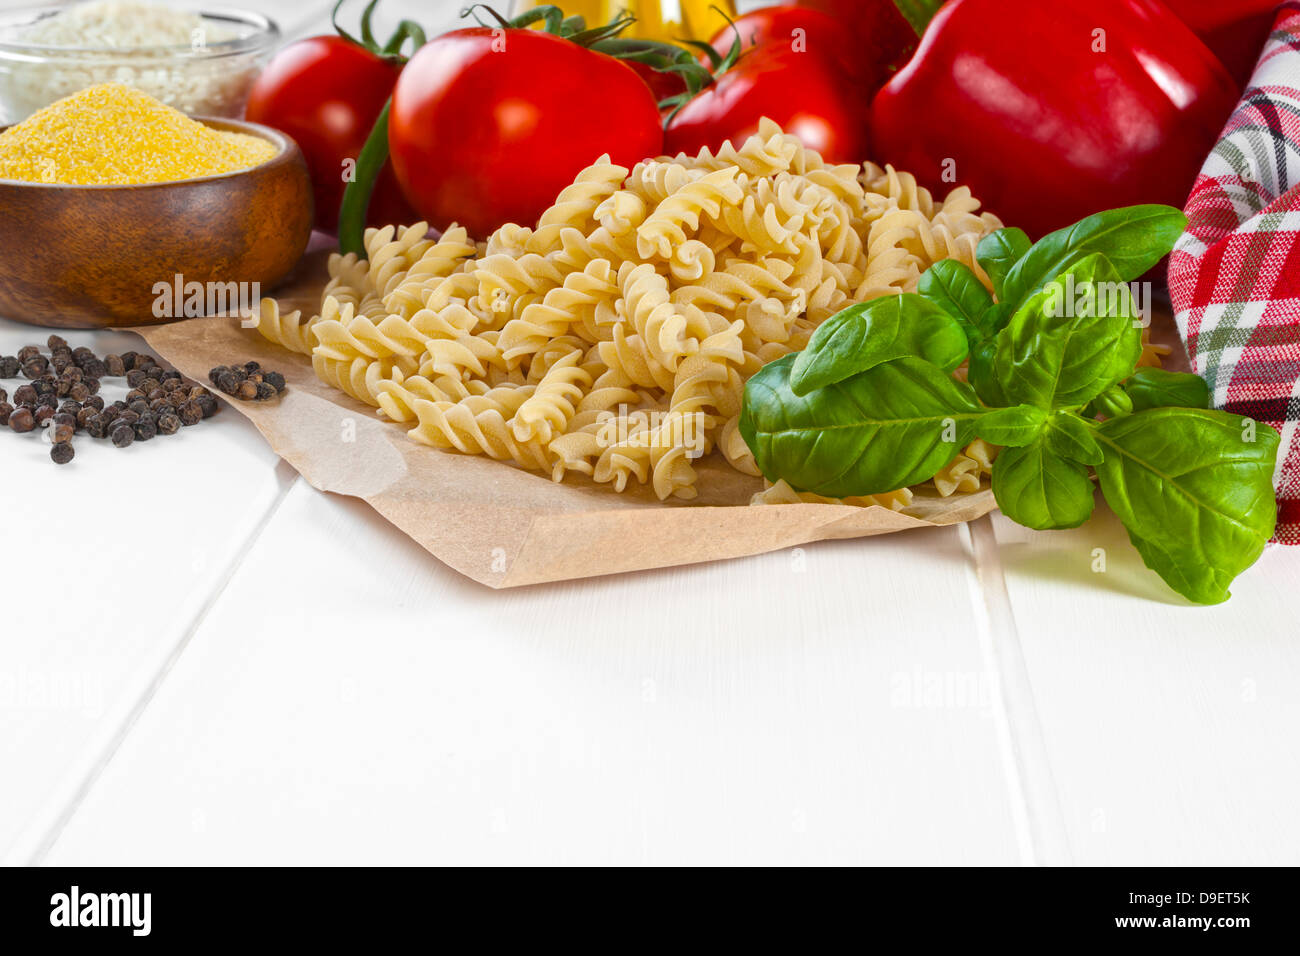 Italian Food Ingredients - ingredients for Italian cooking, basil, bronze die fusili pasta. red capsicum, tomatoes, olive oil... Stock Photo